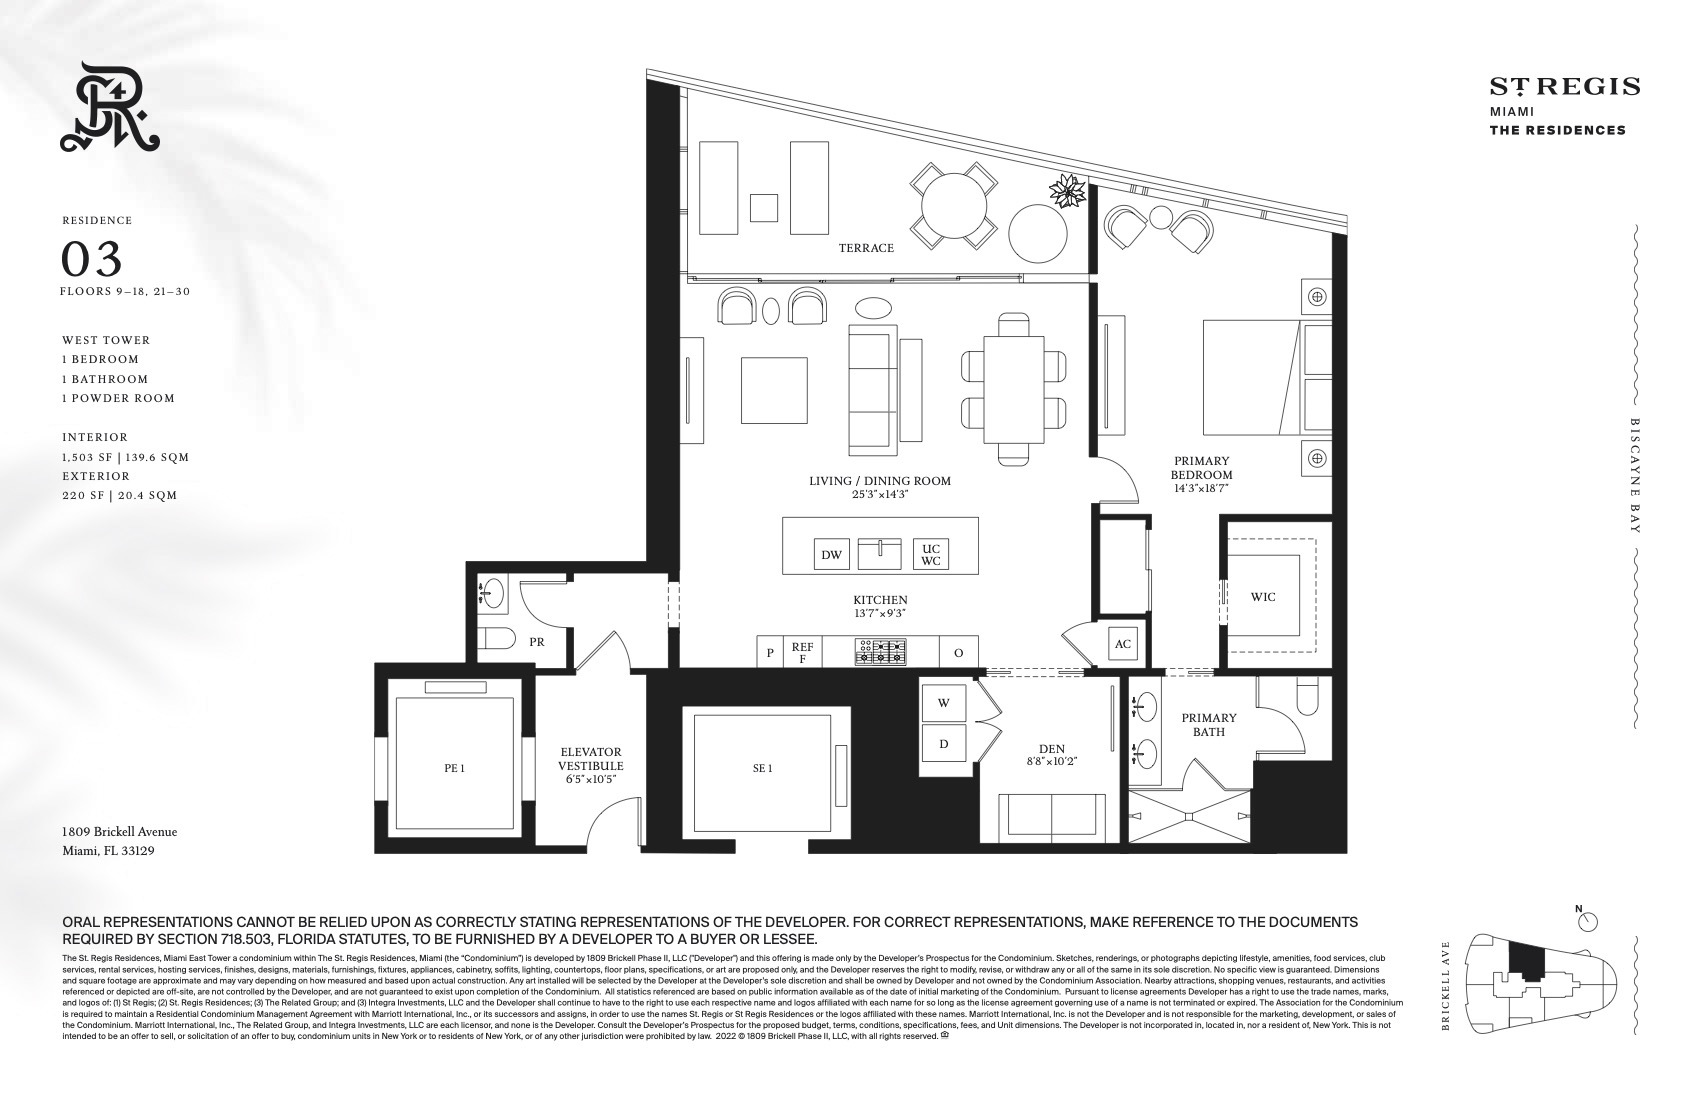 Floor Plan for St. Regis Brickell Floorplans, Residence 03